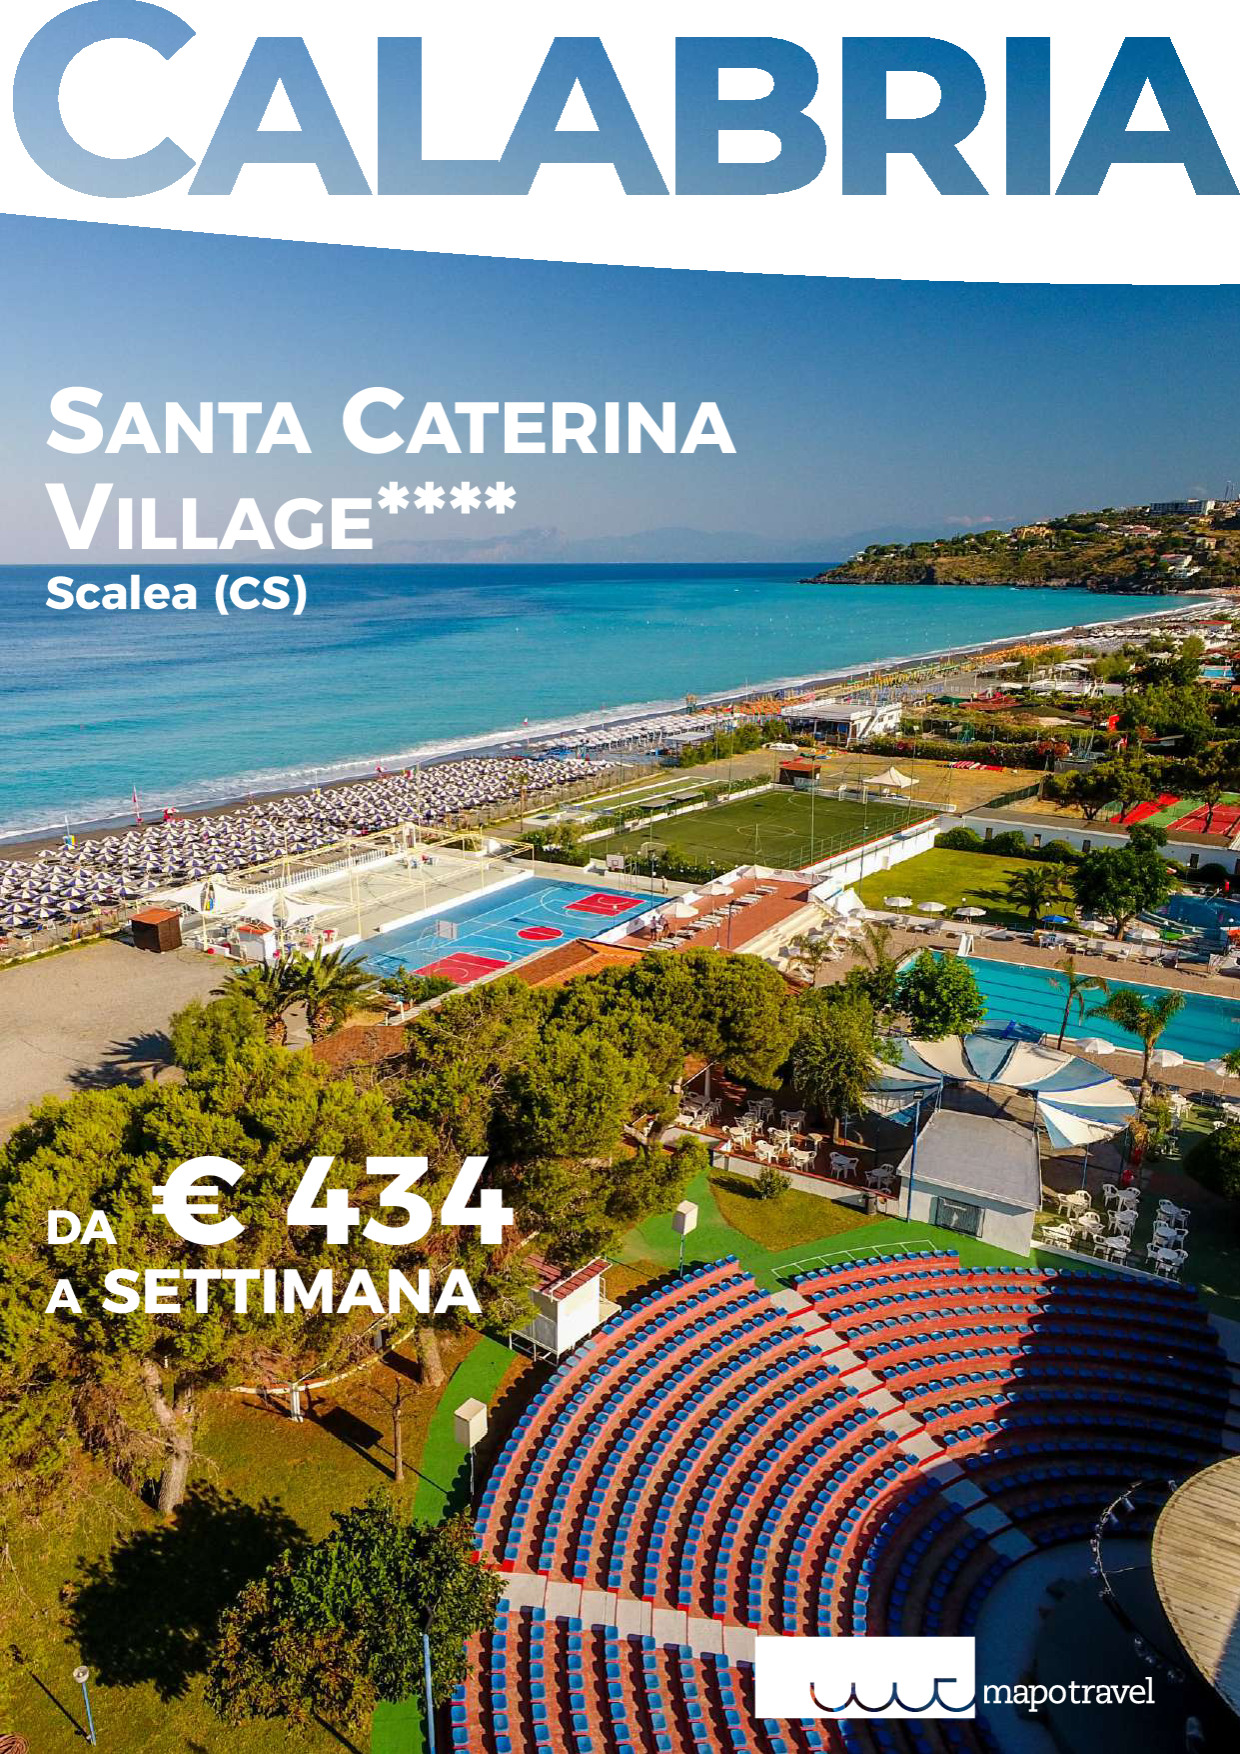 Santa Caterina Village Hotel Club